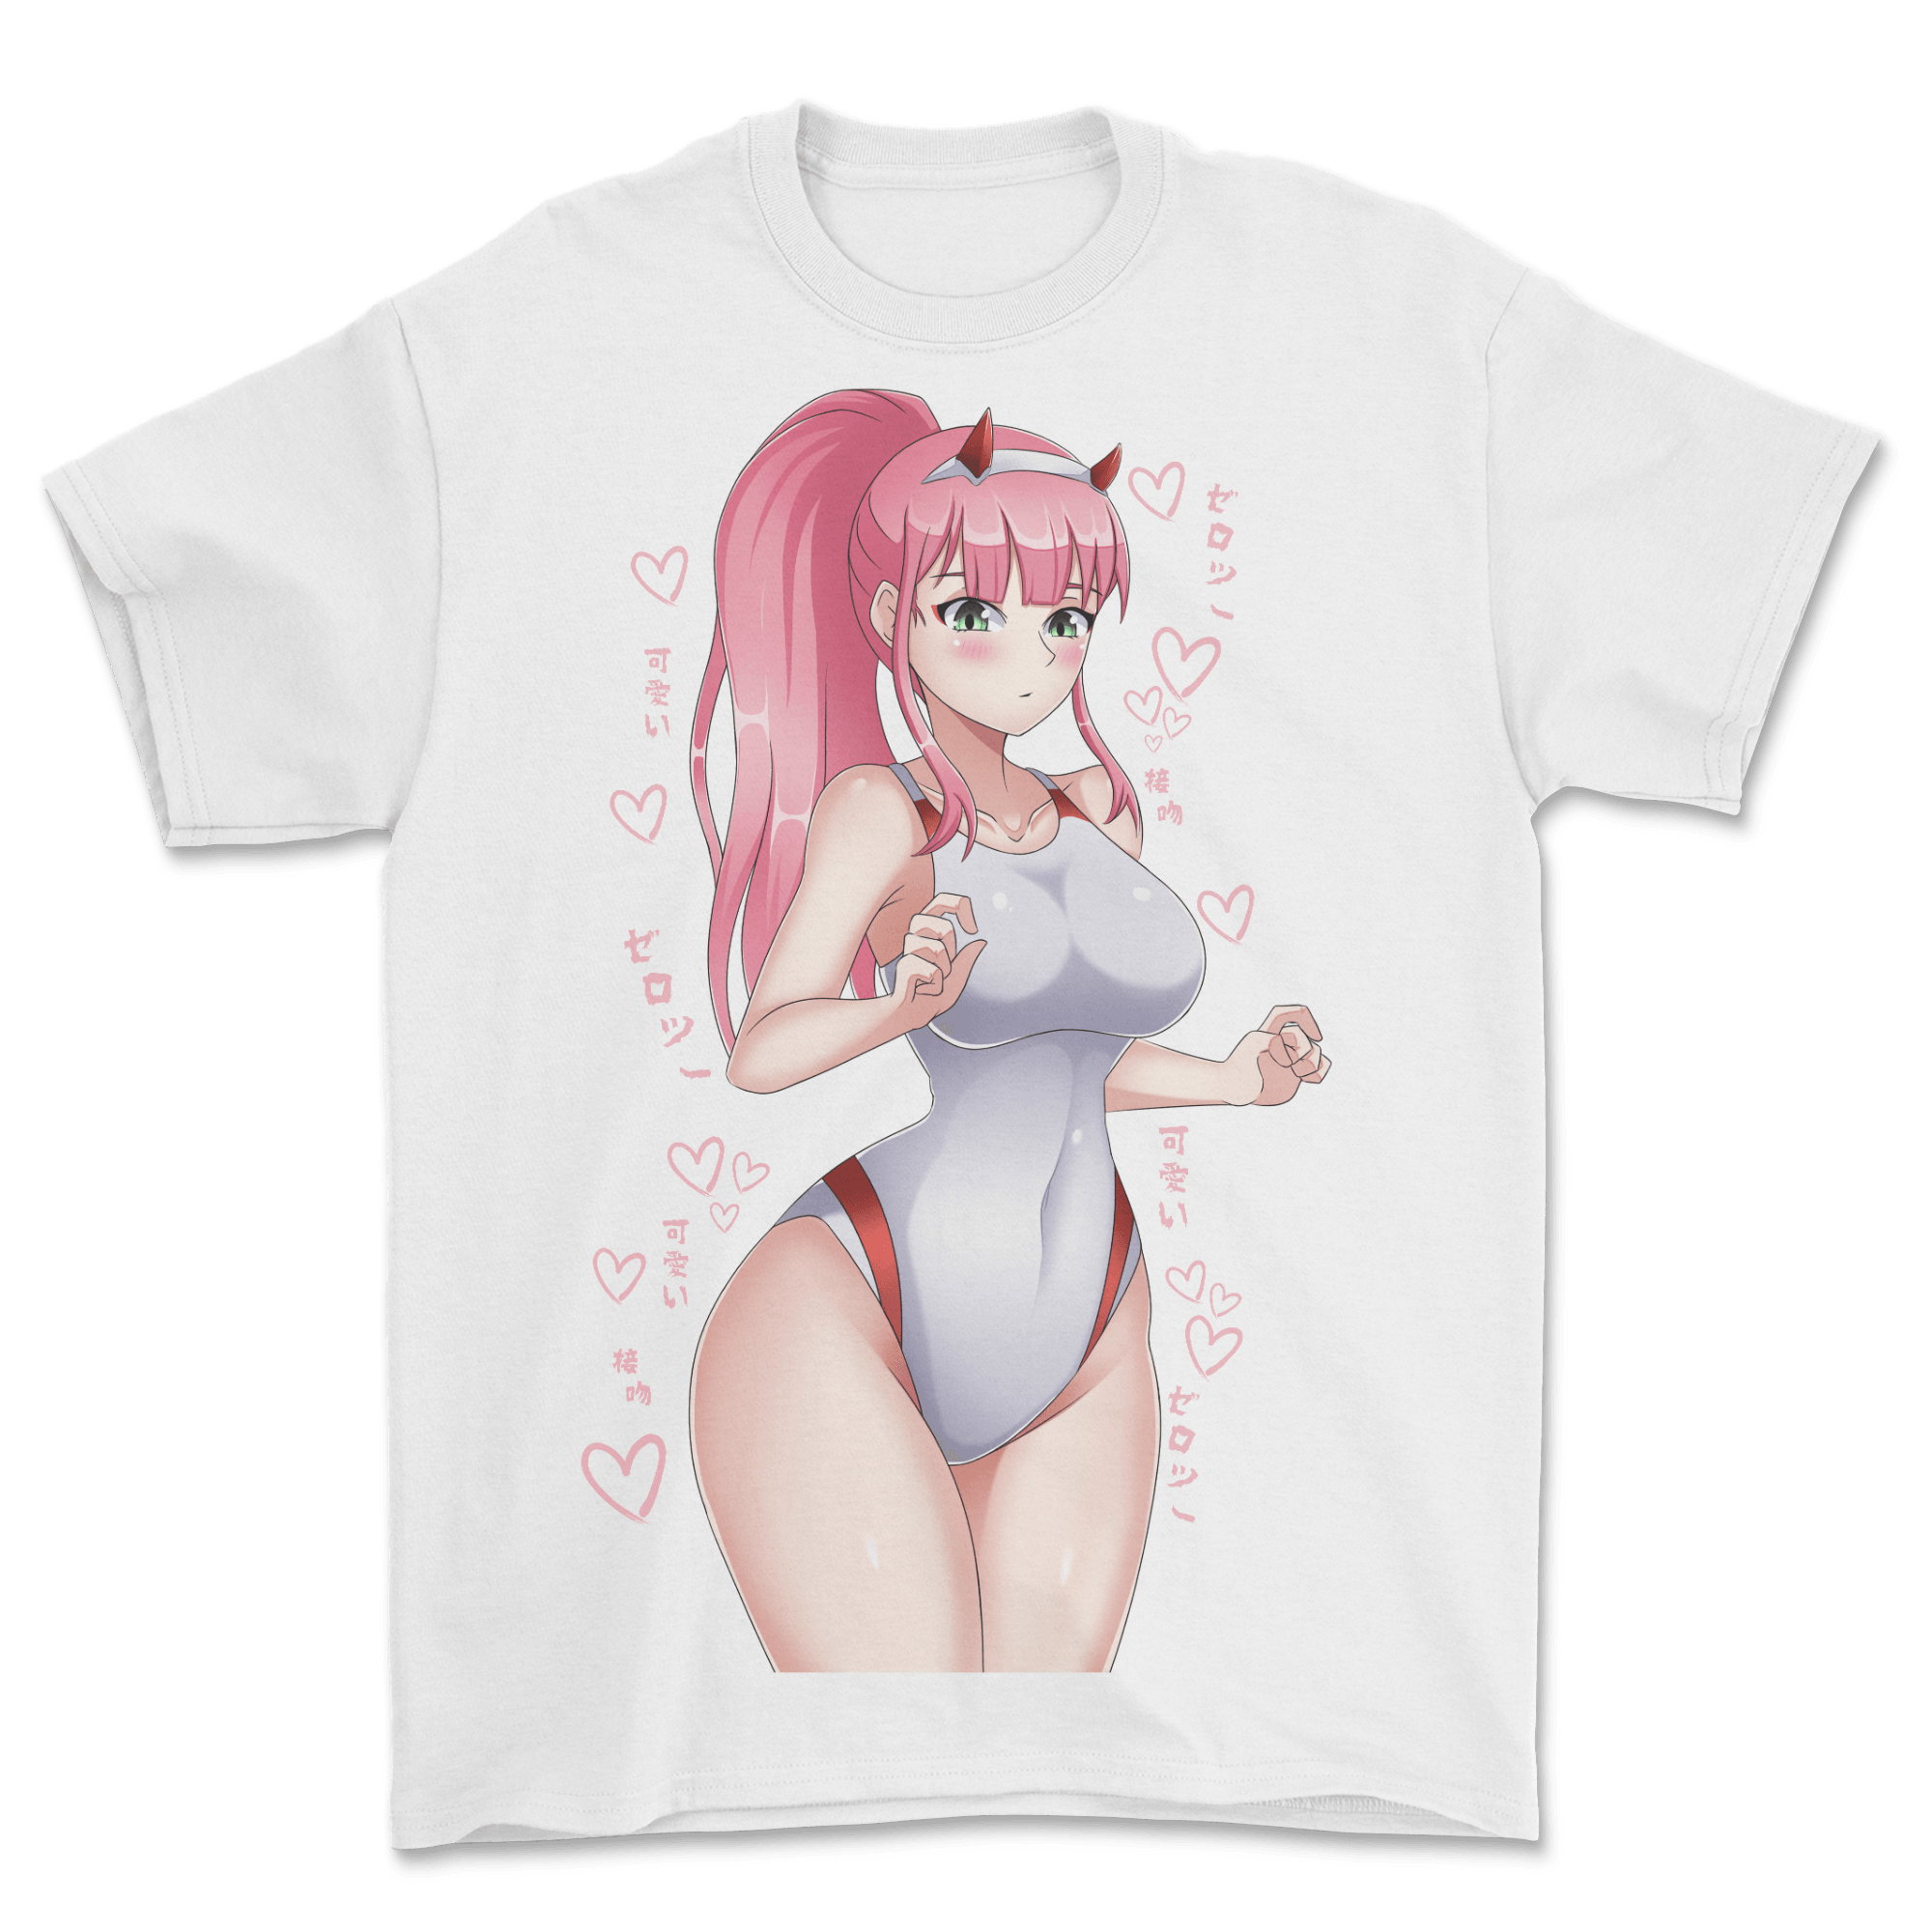 Darling - Eternal Dreamz Clothing Anime Streetwear & Anime Clothing